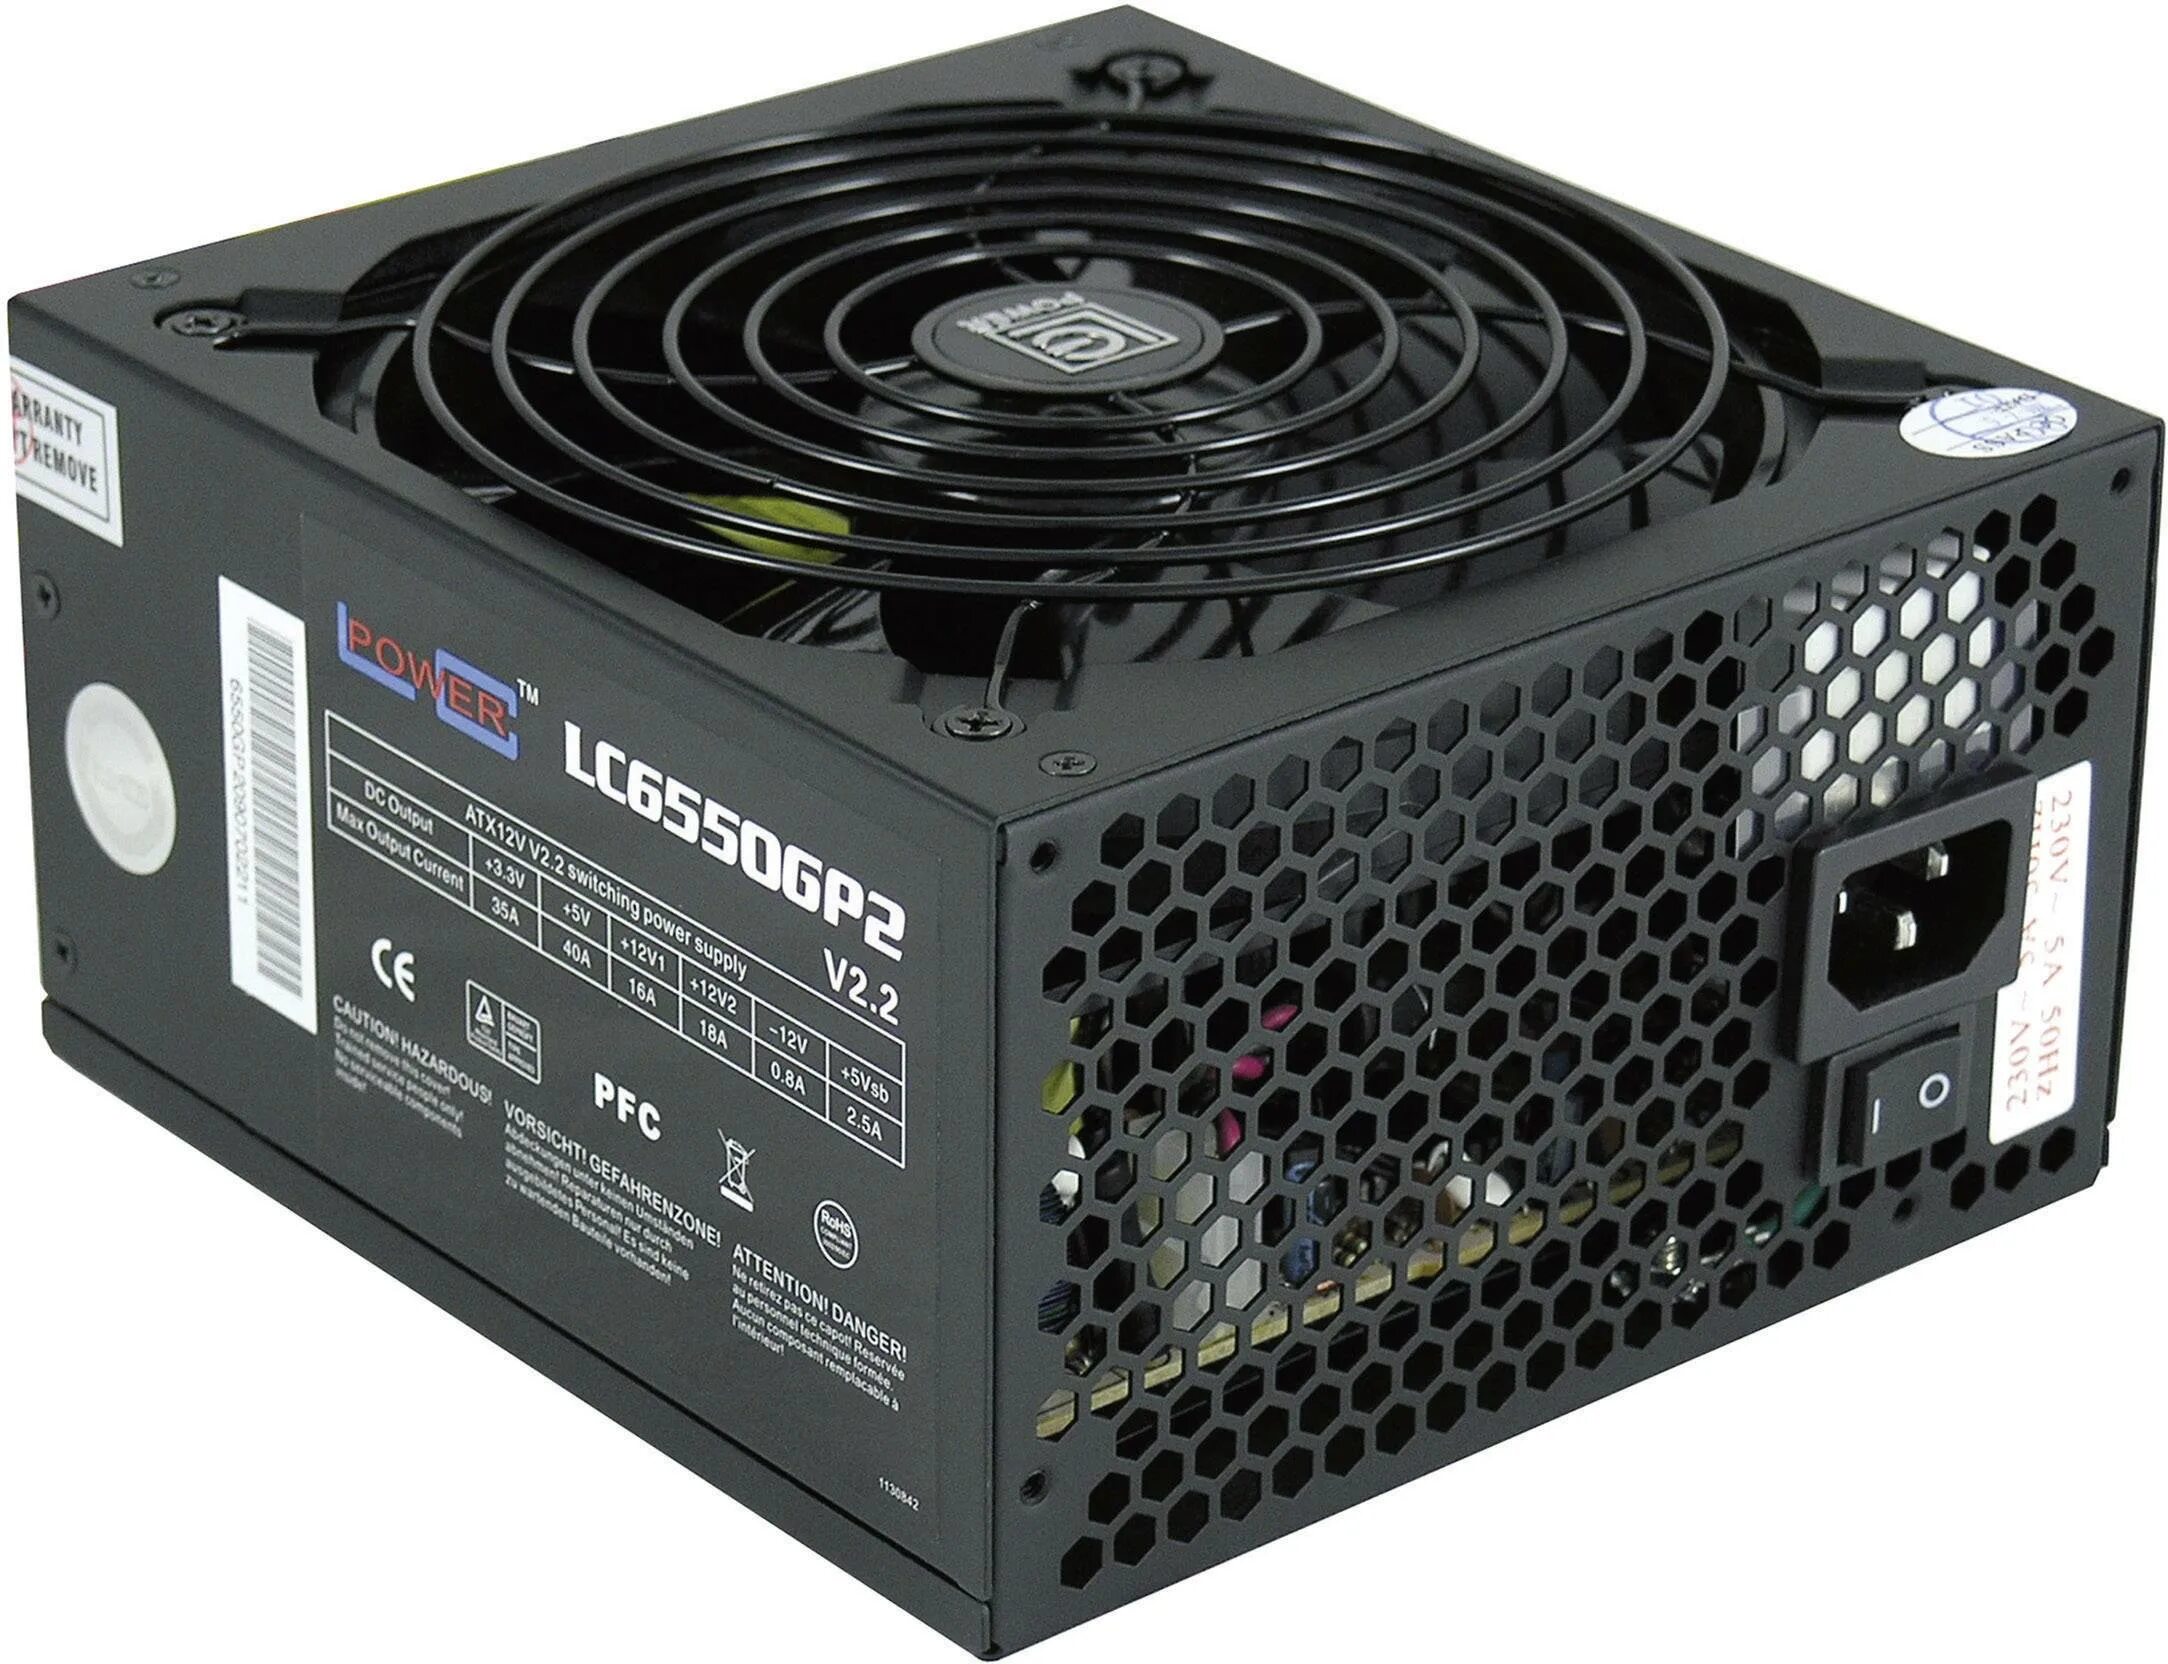 LC Power lc6420. LC Power lc6650 v2.3. Блок питания LC-Power lc600-12 v2.31 450w. Power 550 w.